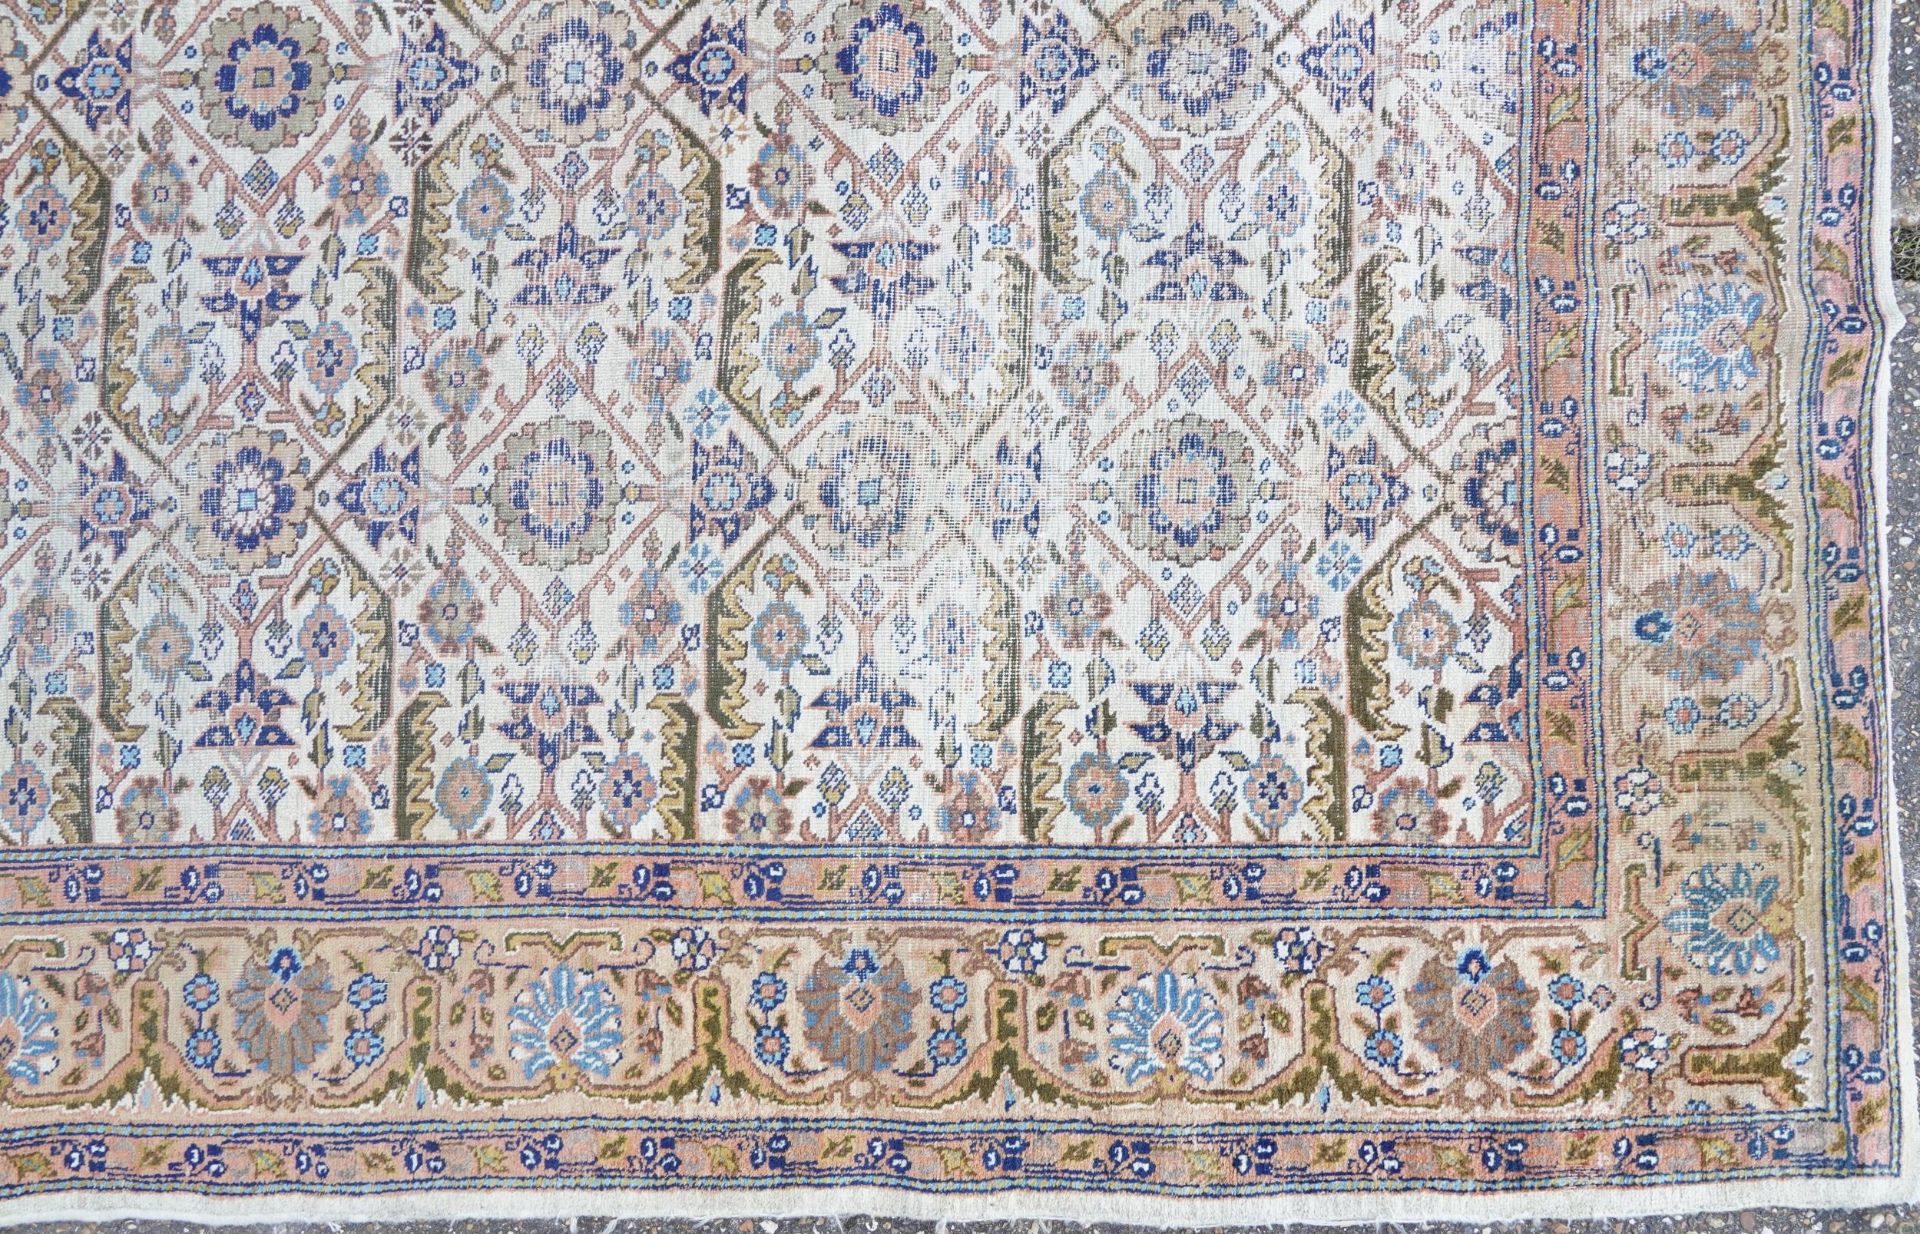 Rectangular Persian rug having an allover floral design within corresponding borders, 345cm x 255cm - Image 10 of 11